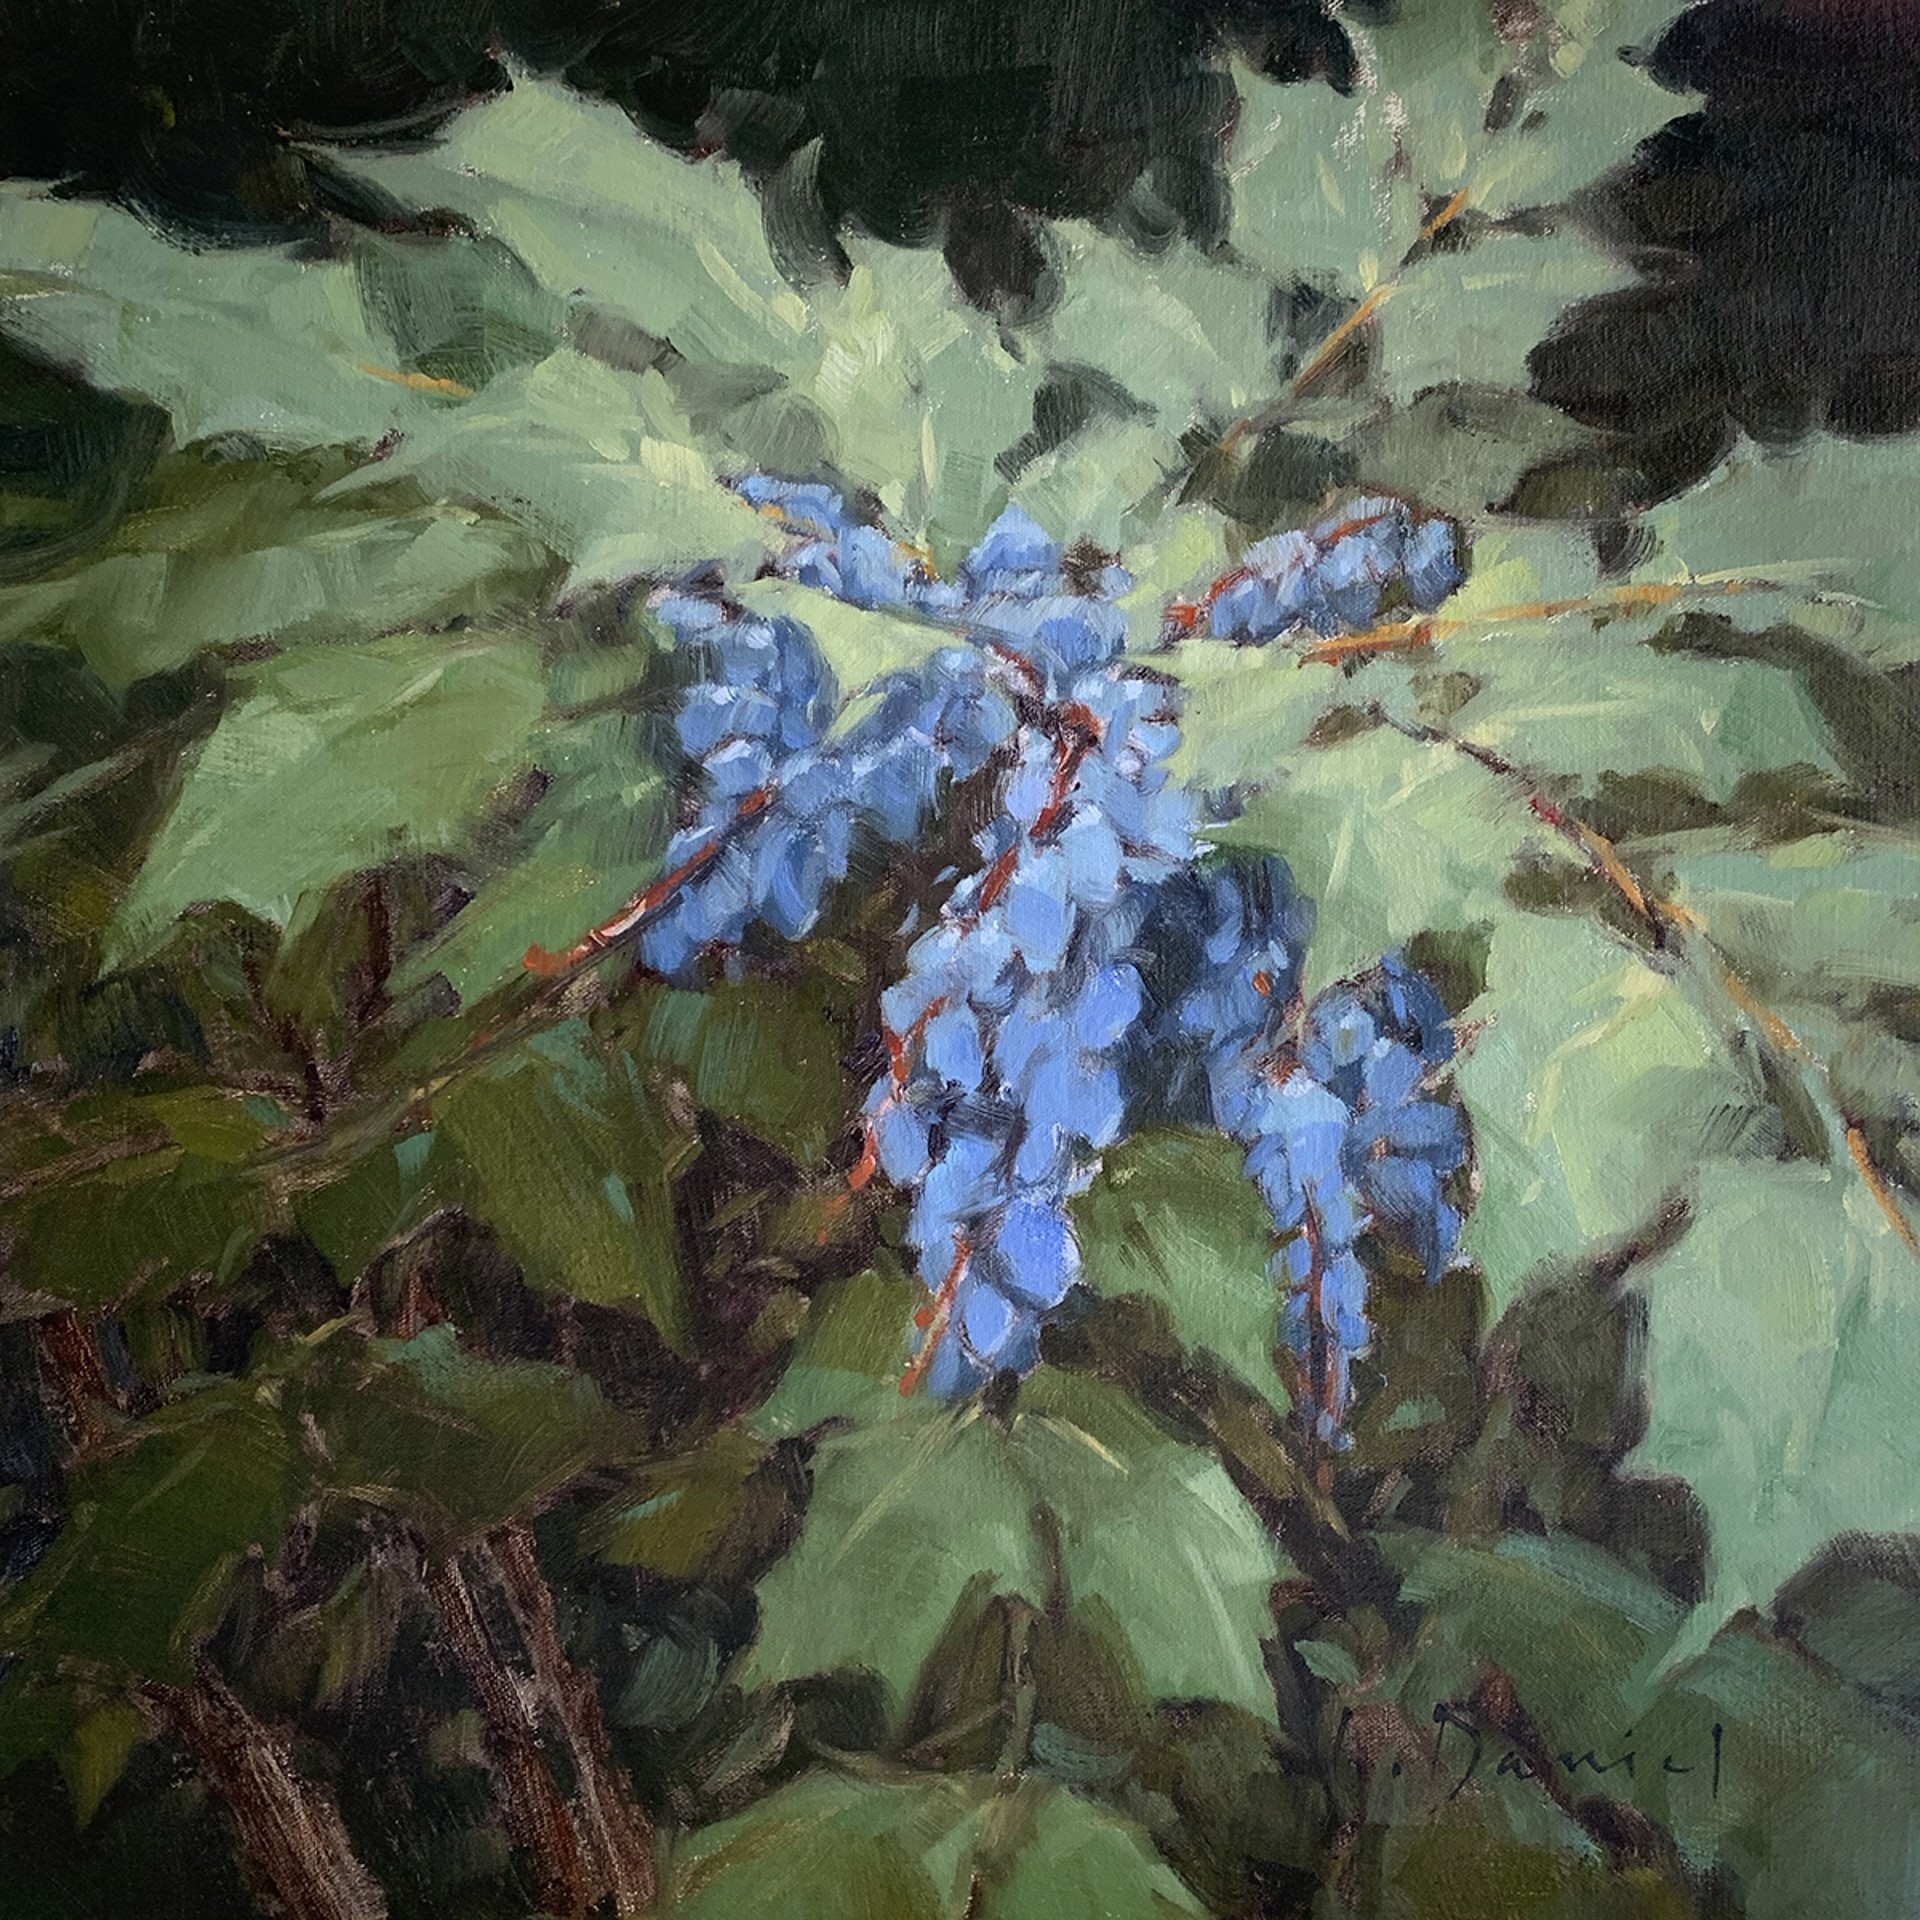 Dusty Berries by Laurel Daniel